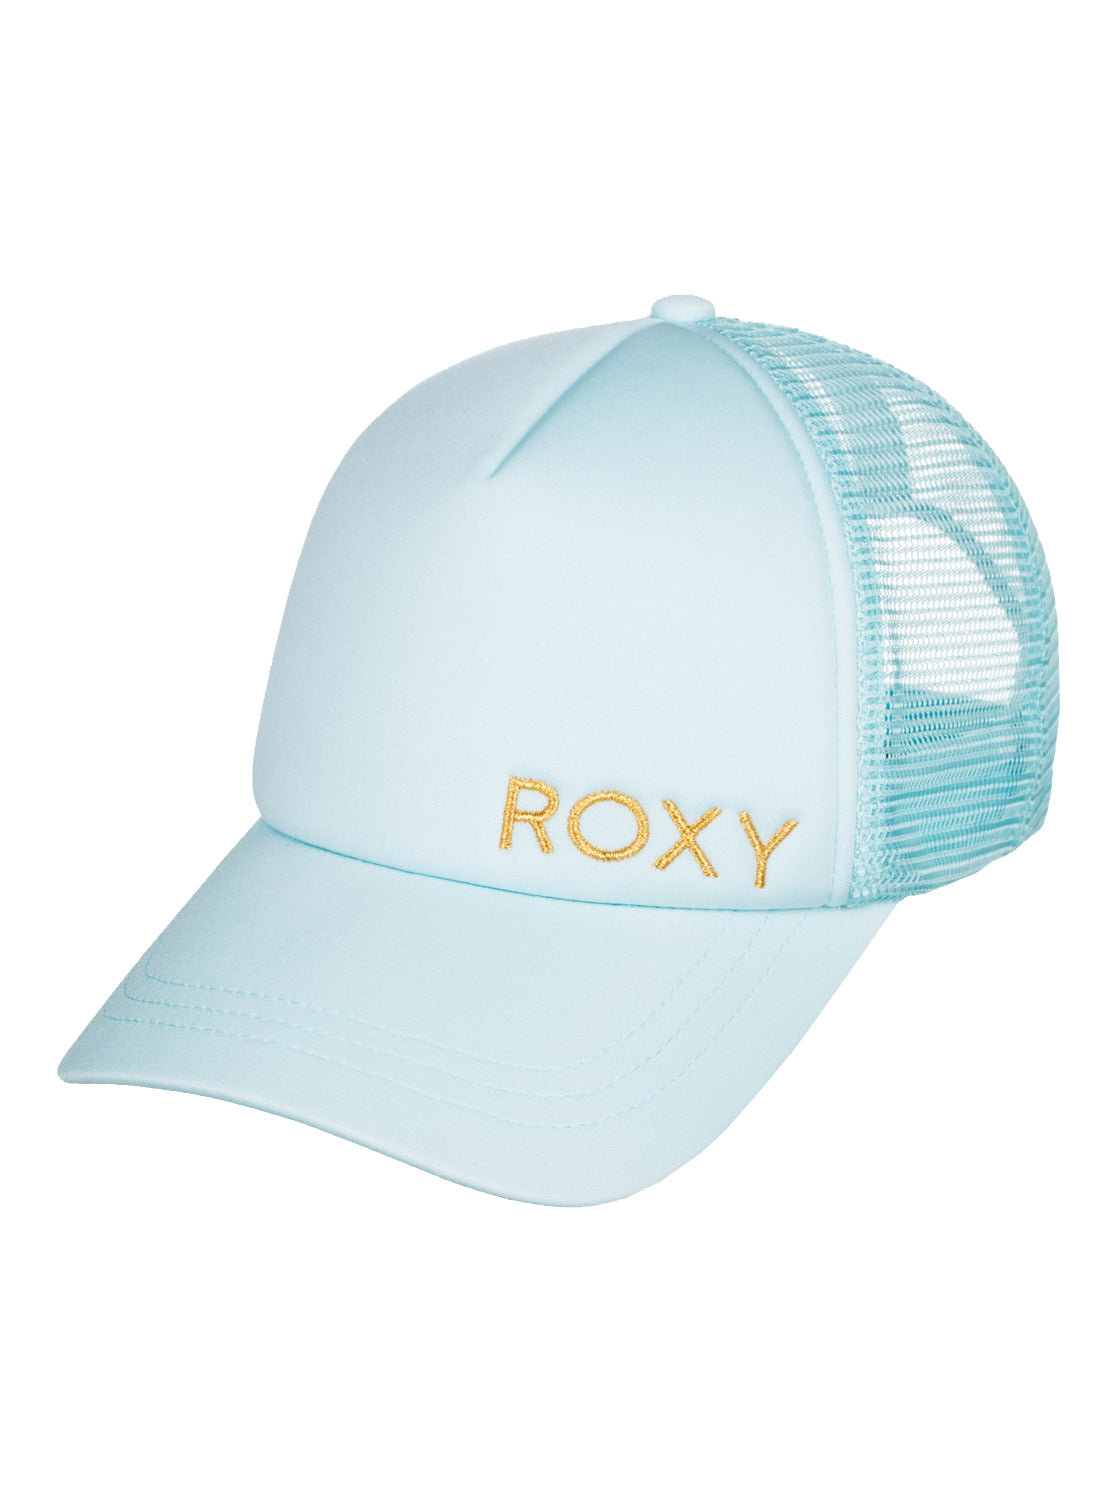 Roxy Finish Line 2 Hat